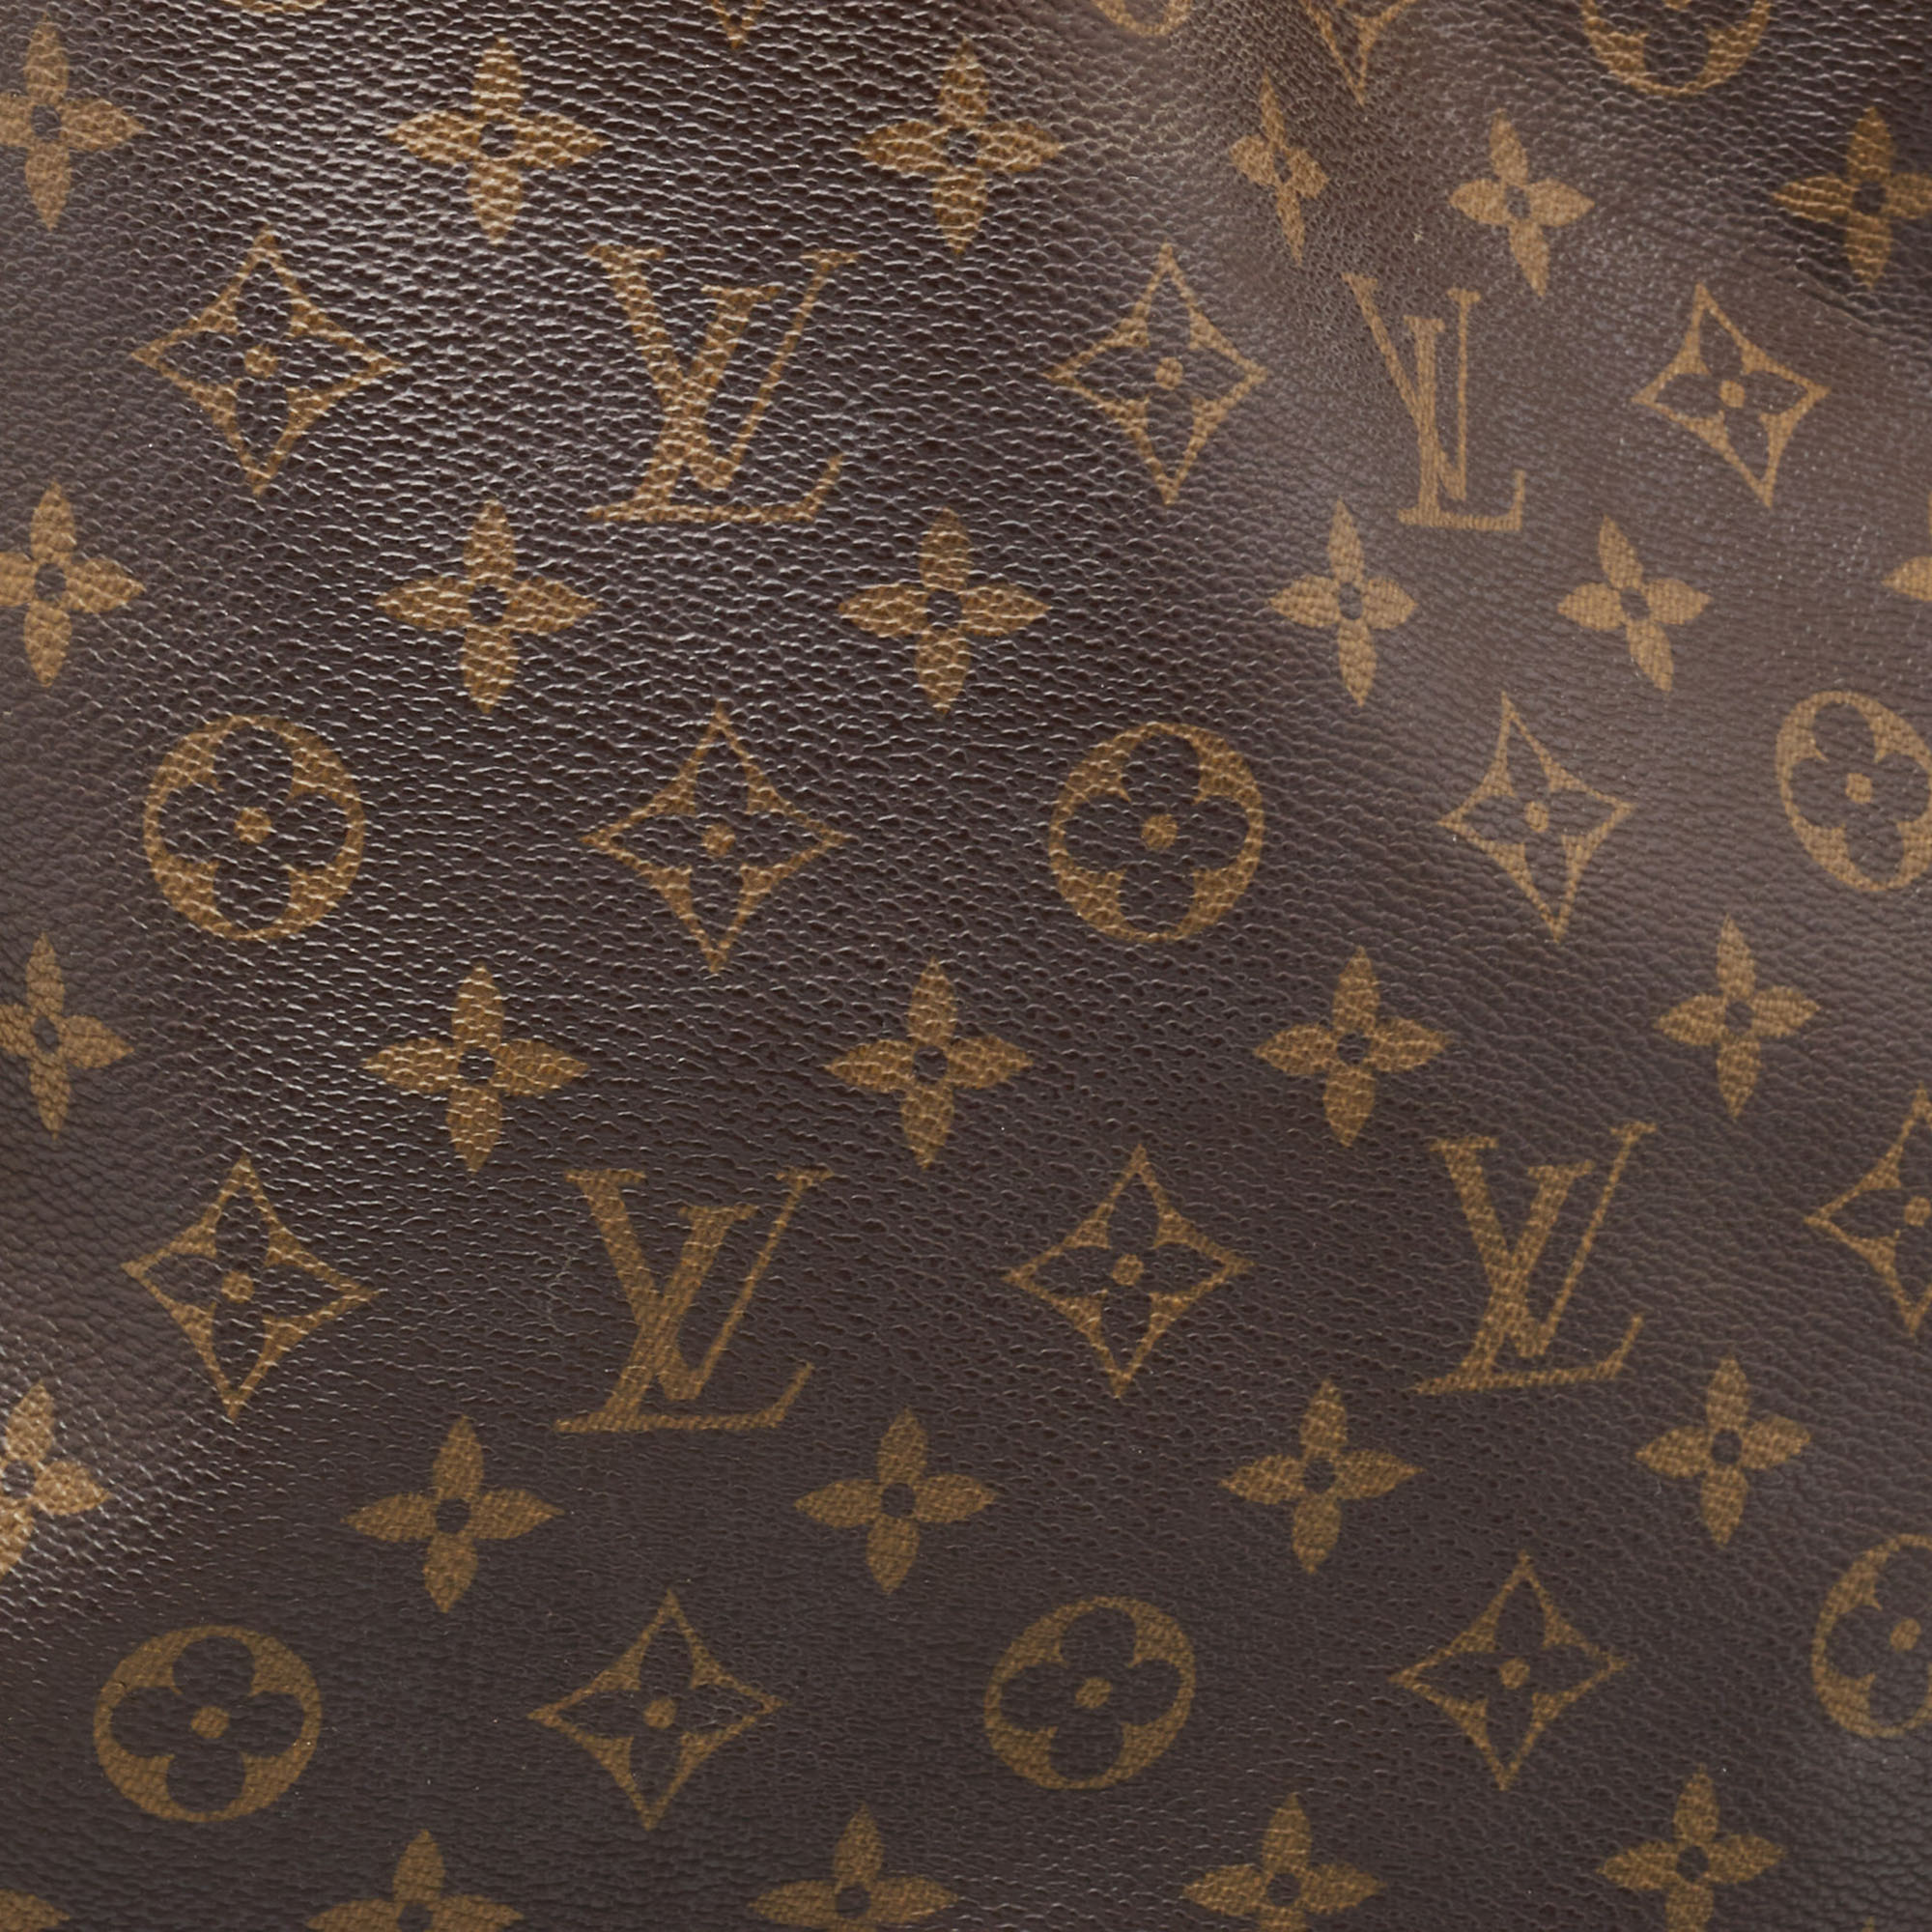 Louis Vuitton Monogram Canvas Artsy MM Bag